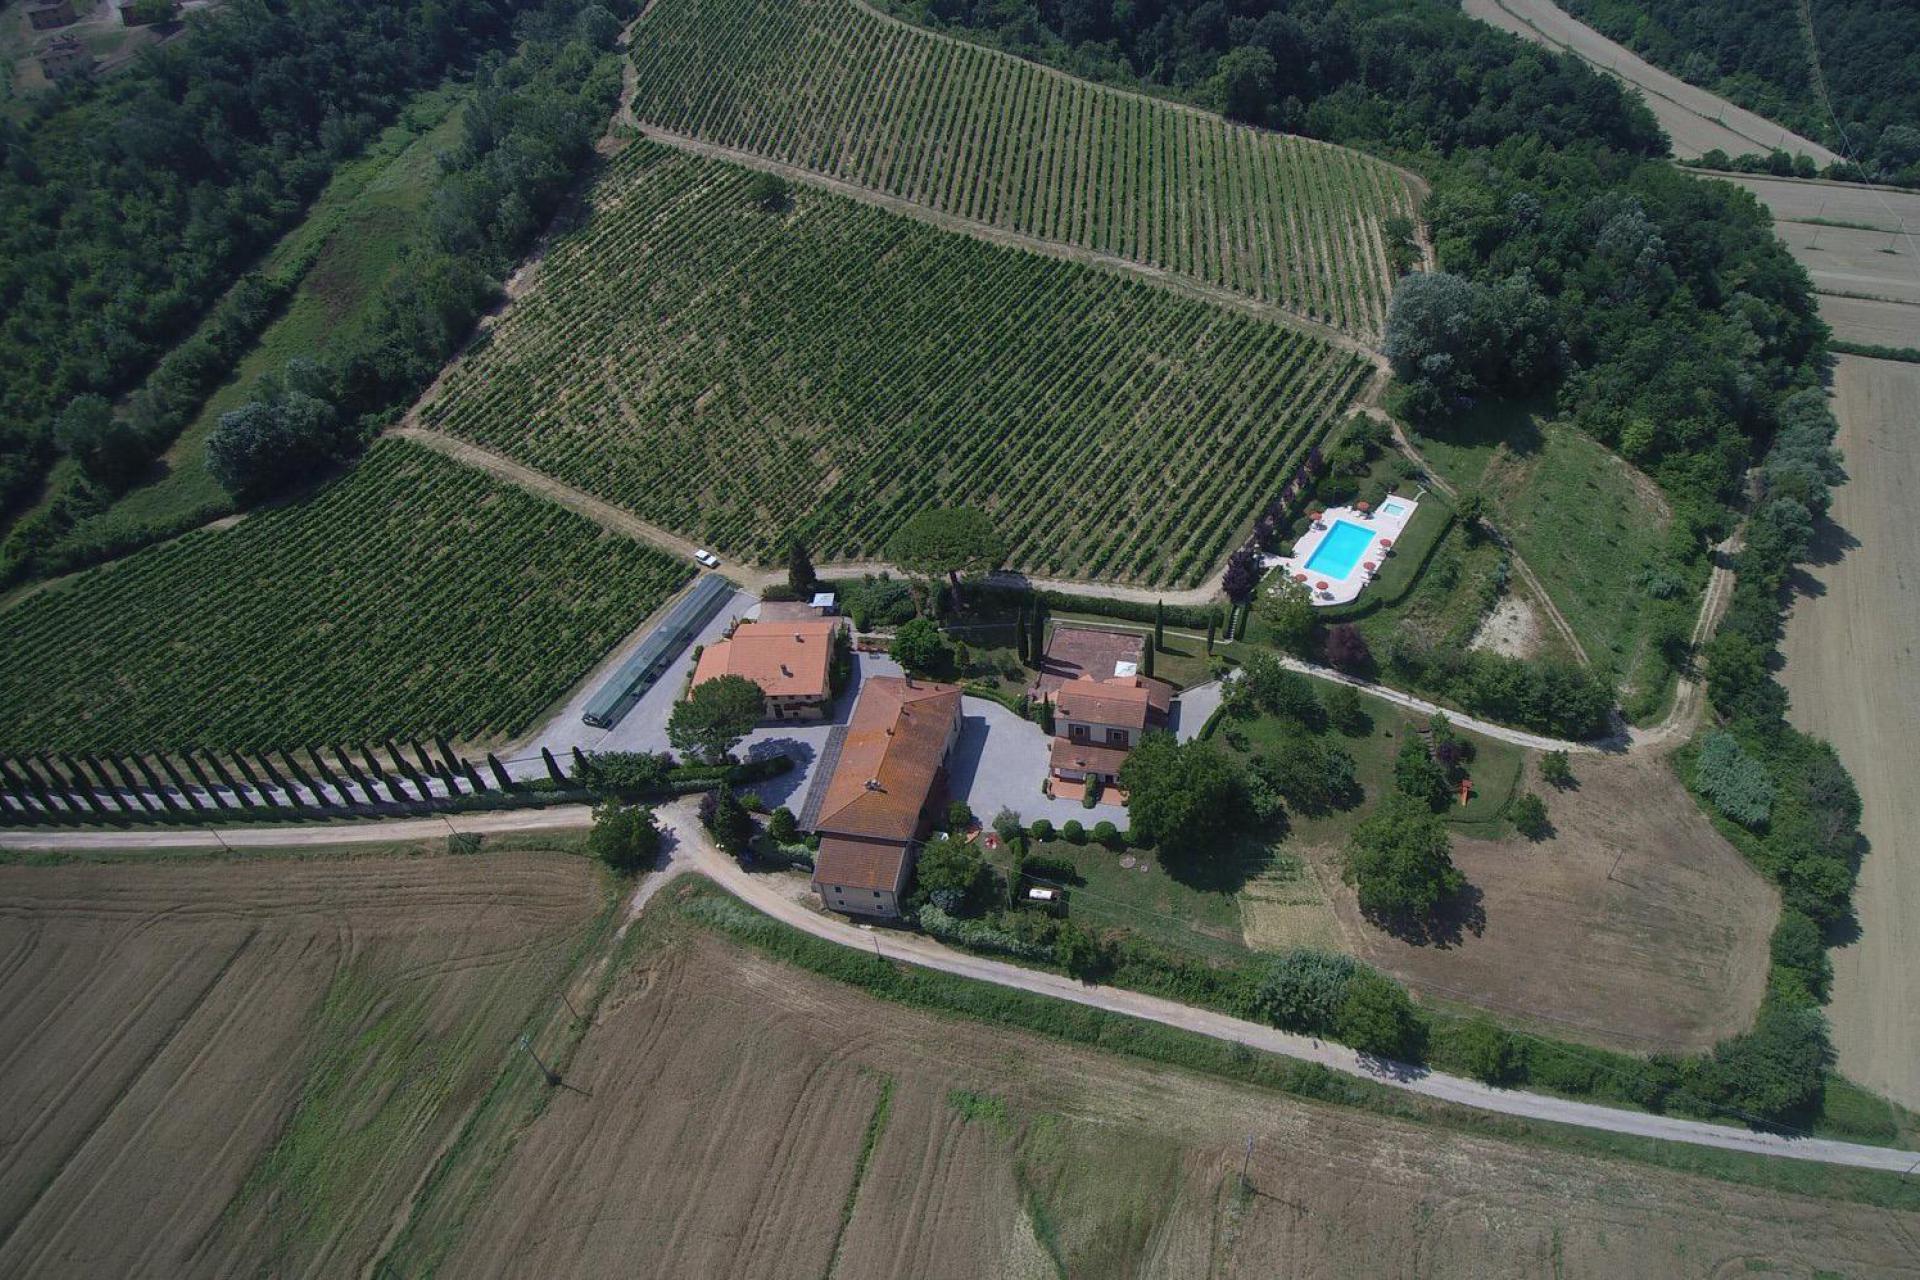 Agriturismo Toscane Familie agriturismo met groot zwembad en peuterbadje